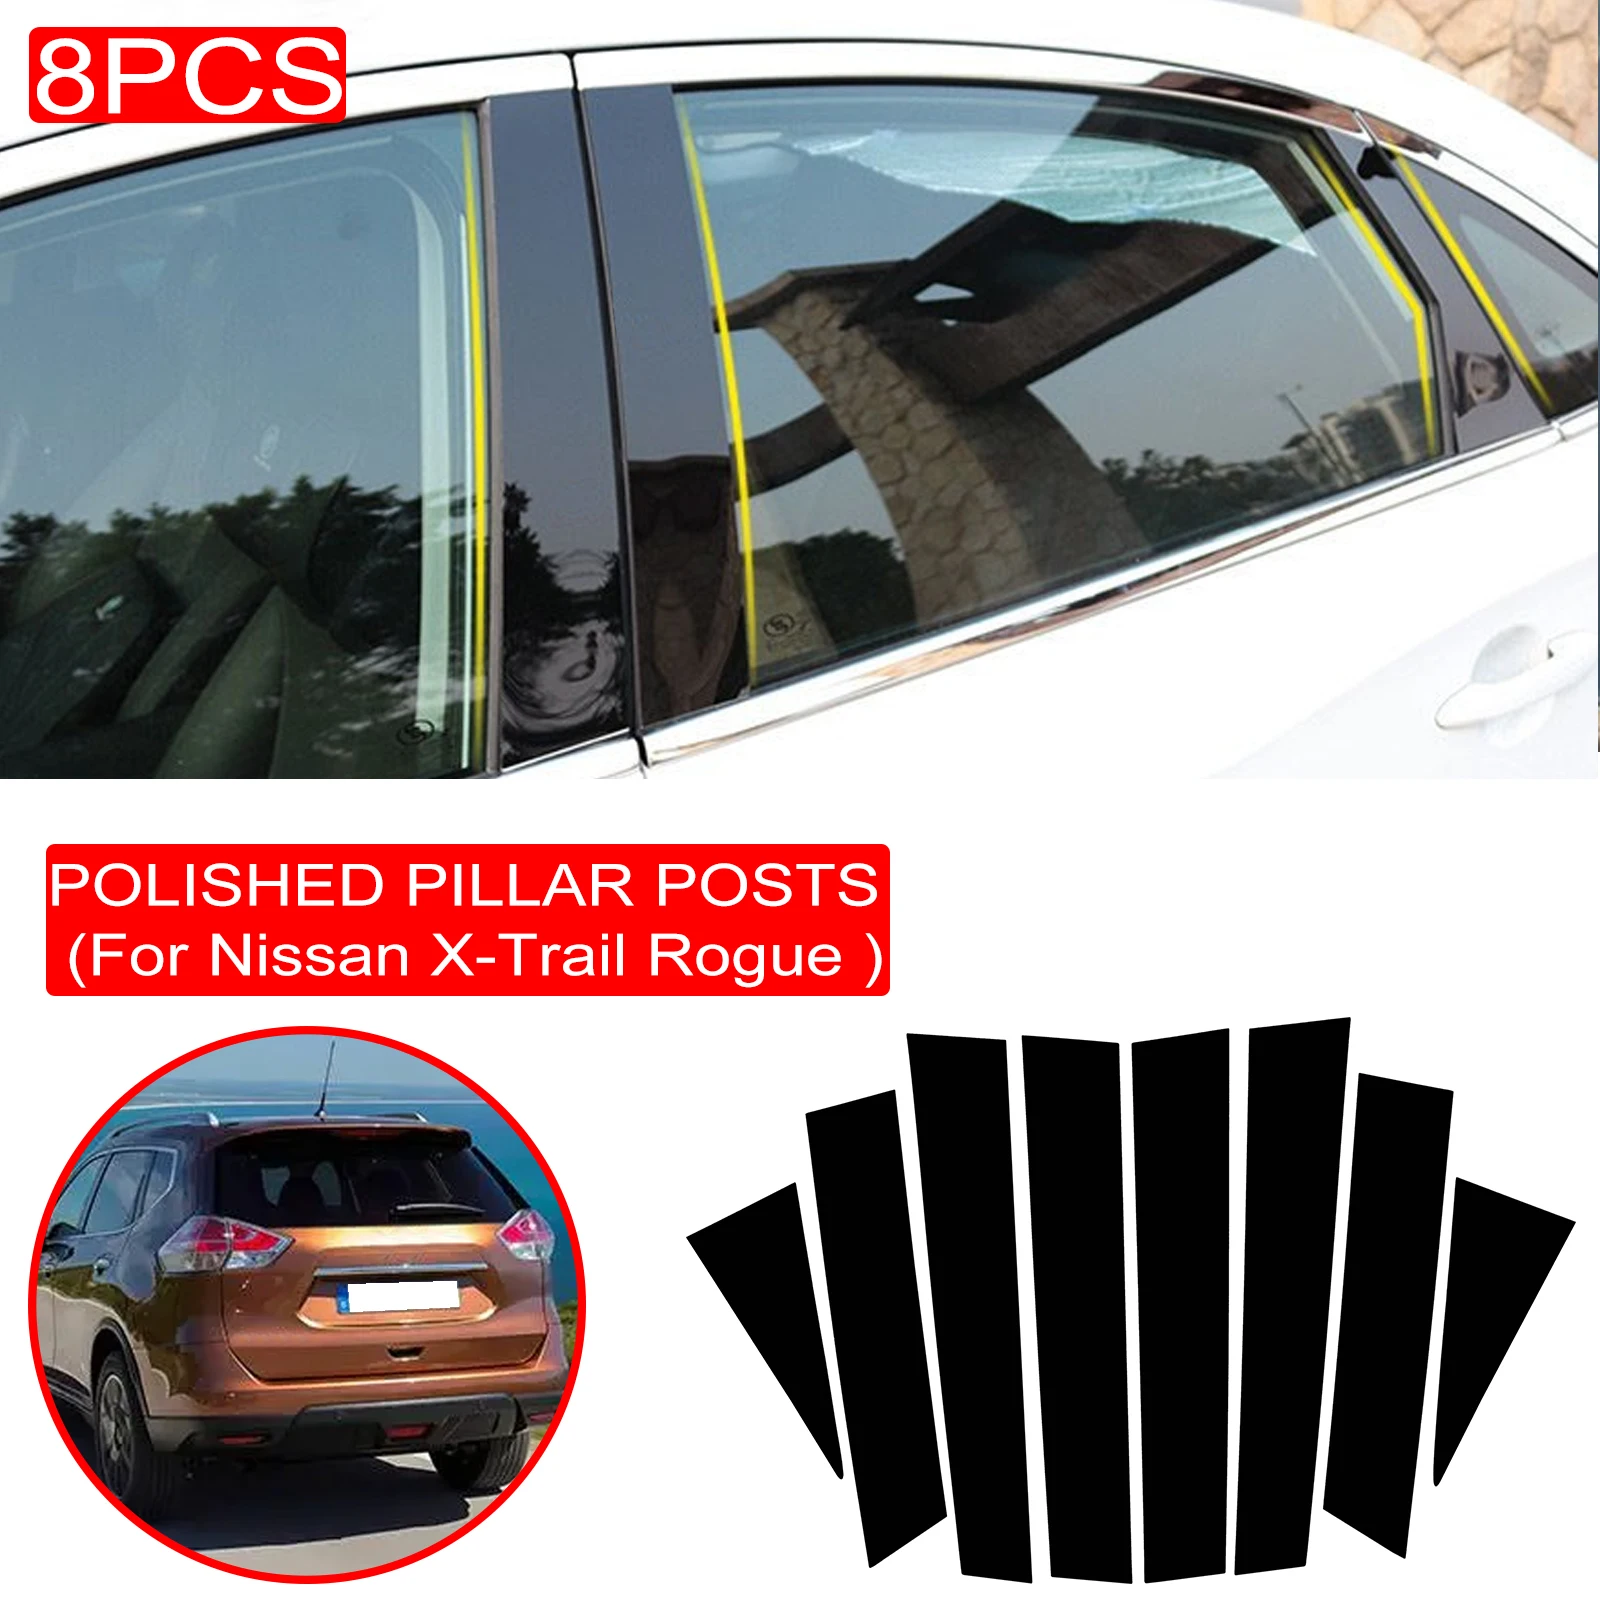 

8PCS Polished Pillar Posts Fit For Nissan X-Trail Rogue 2014-2018 Window Trim Cover BC column sticker